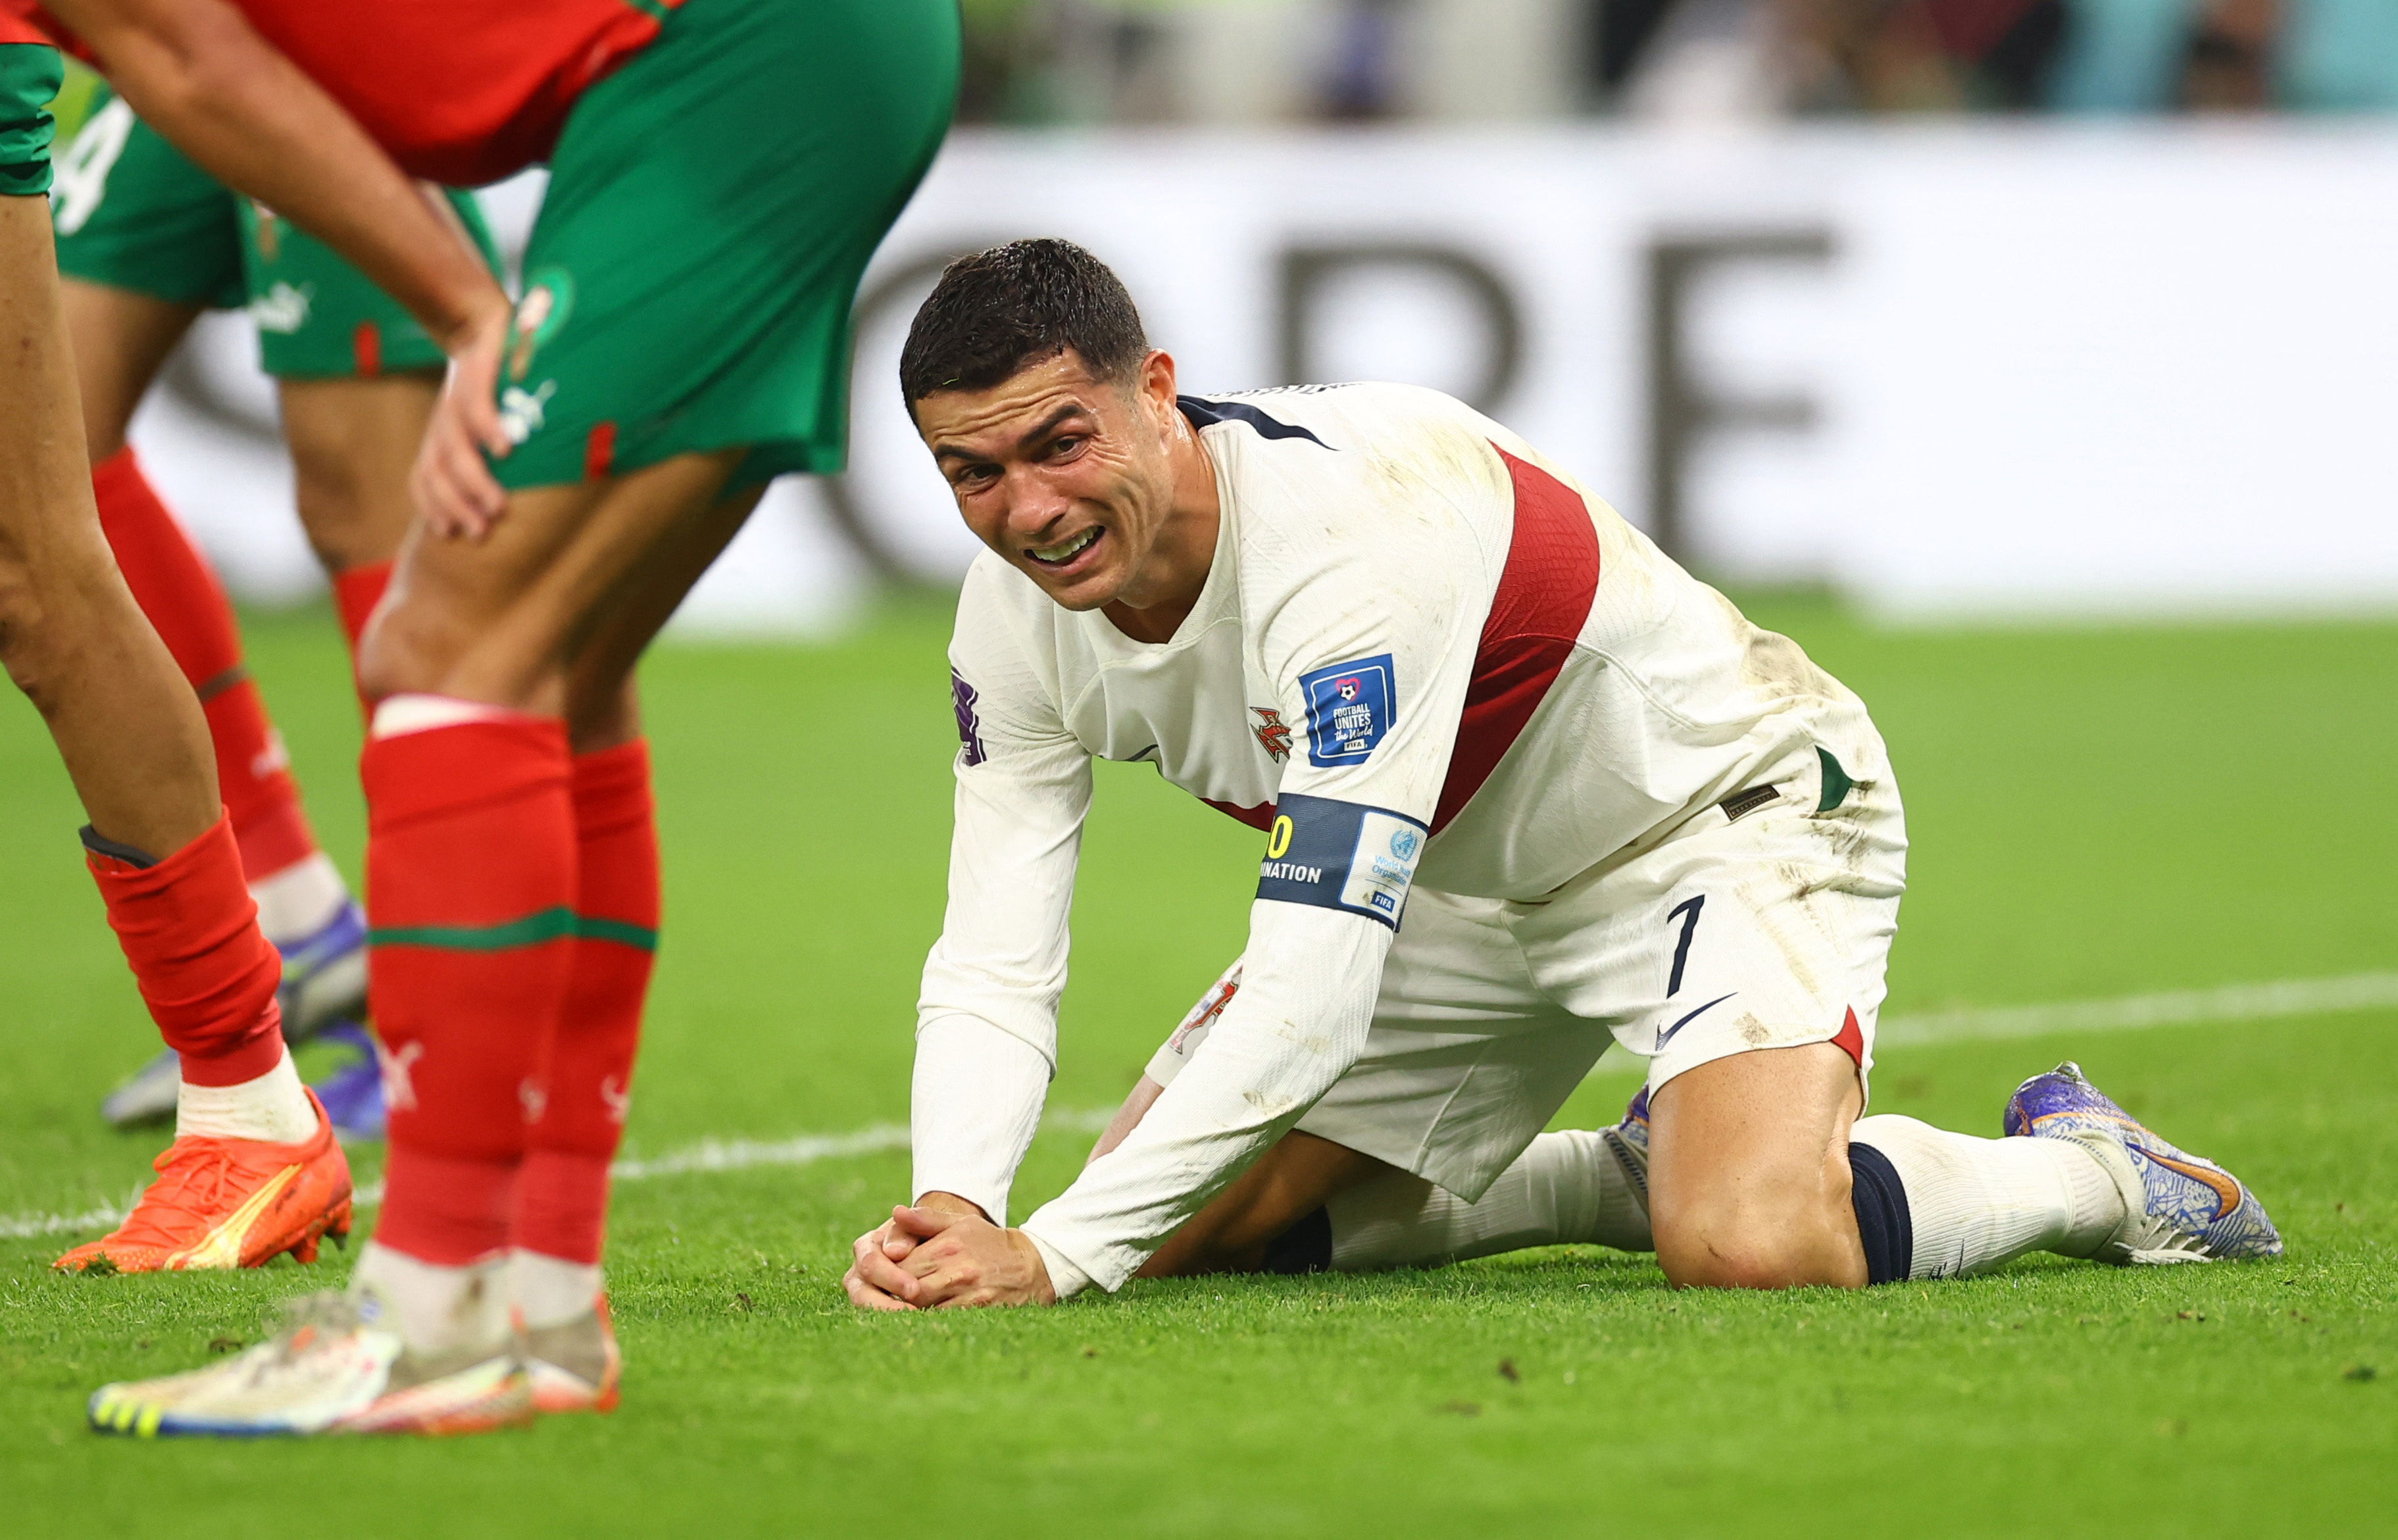 Soccer Football - FIFA World Cup Qatar 2022 - Quarter Final - Morocco v Portugal - Al Thumama Stadium, Doha, Qatar - December 10, 2022 Portugal's Cristiano Ronaldo reacts REUTERS/Carl Recine